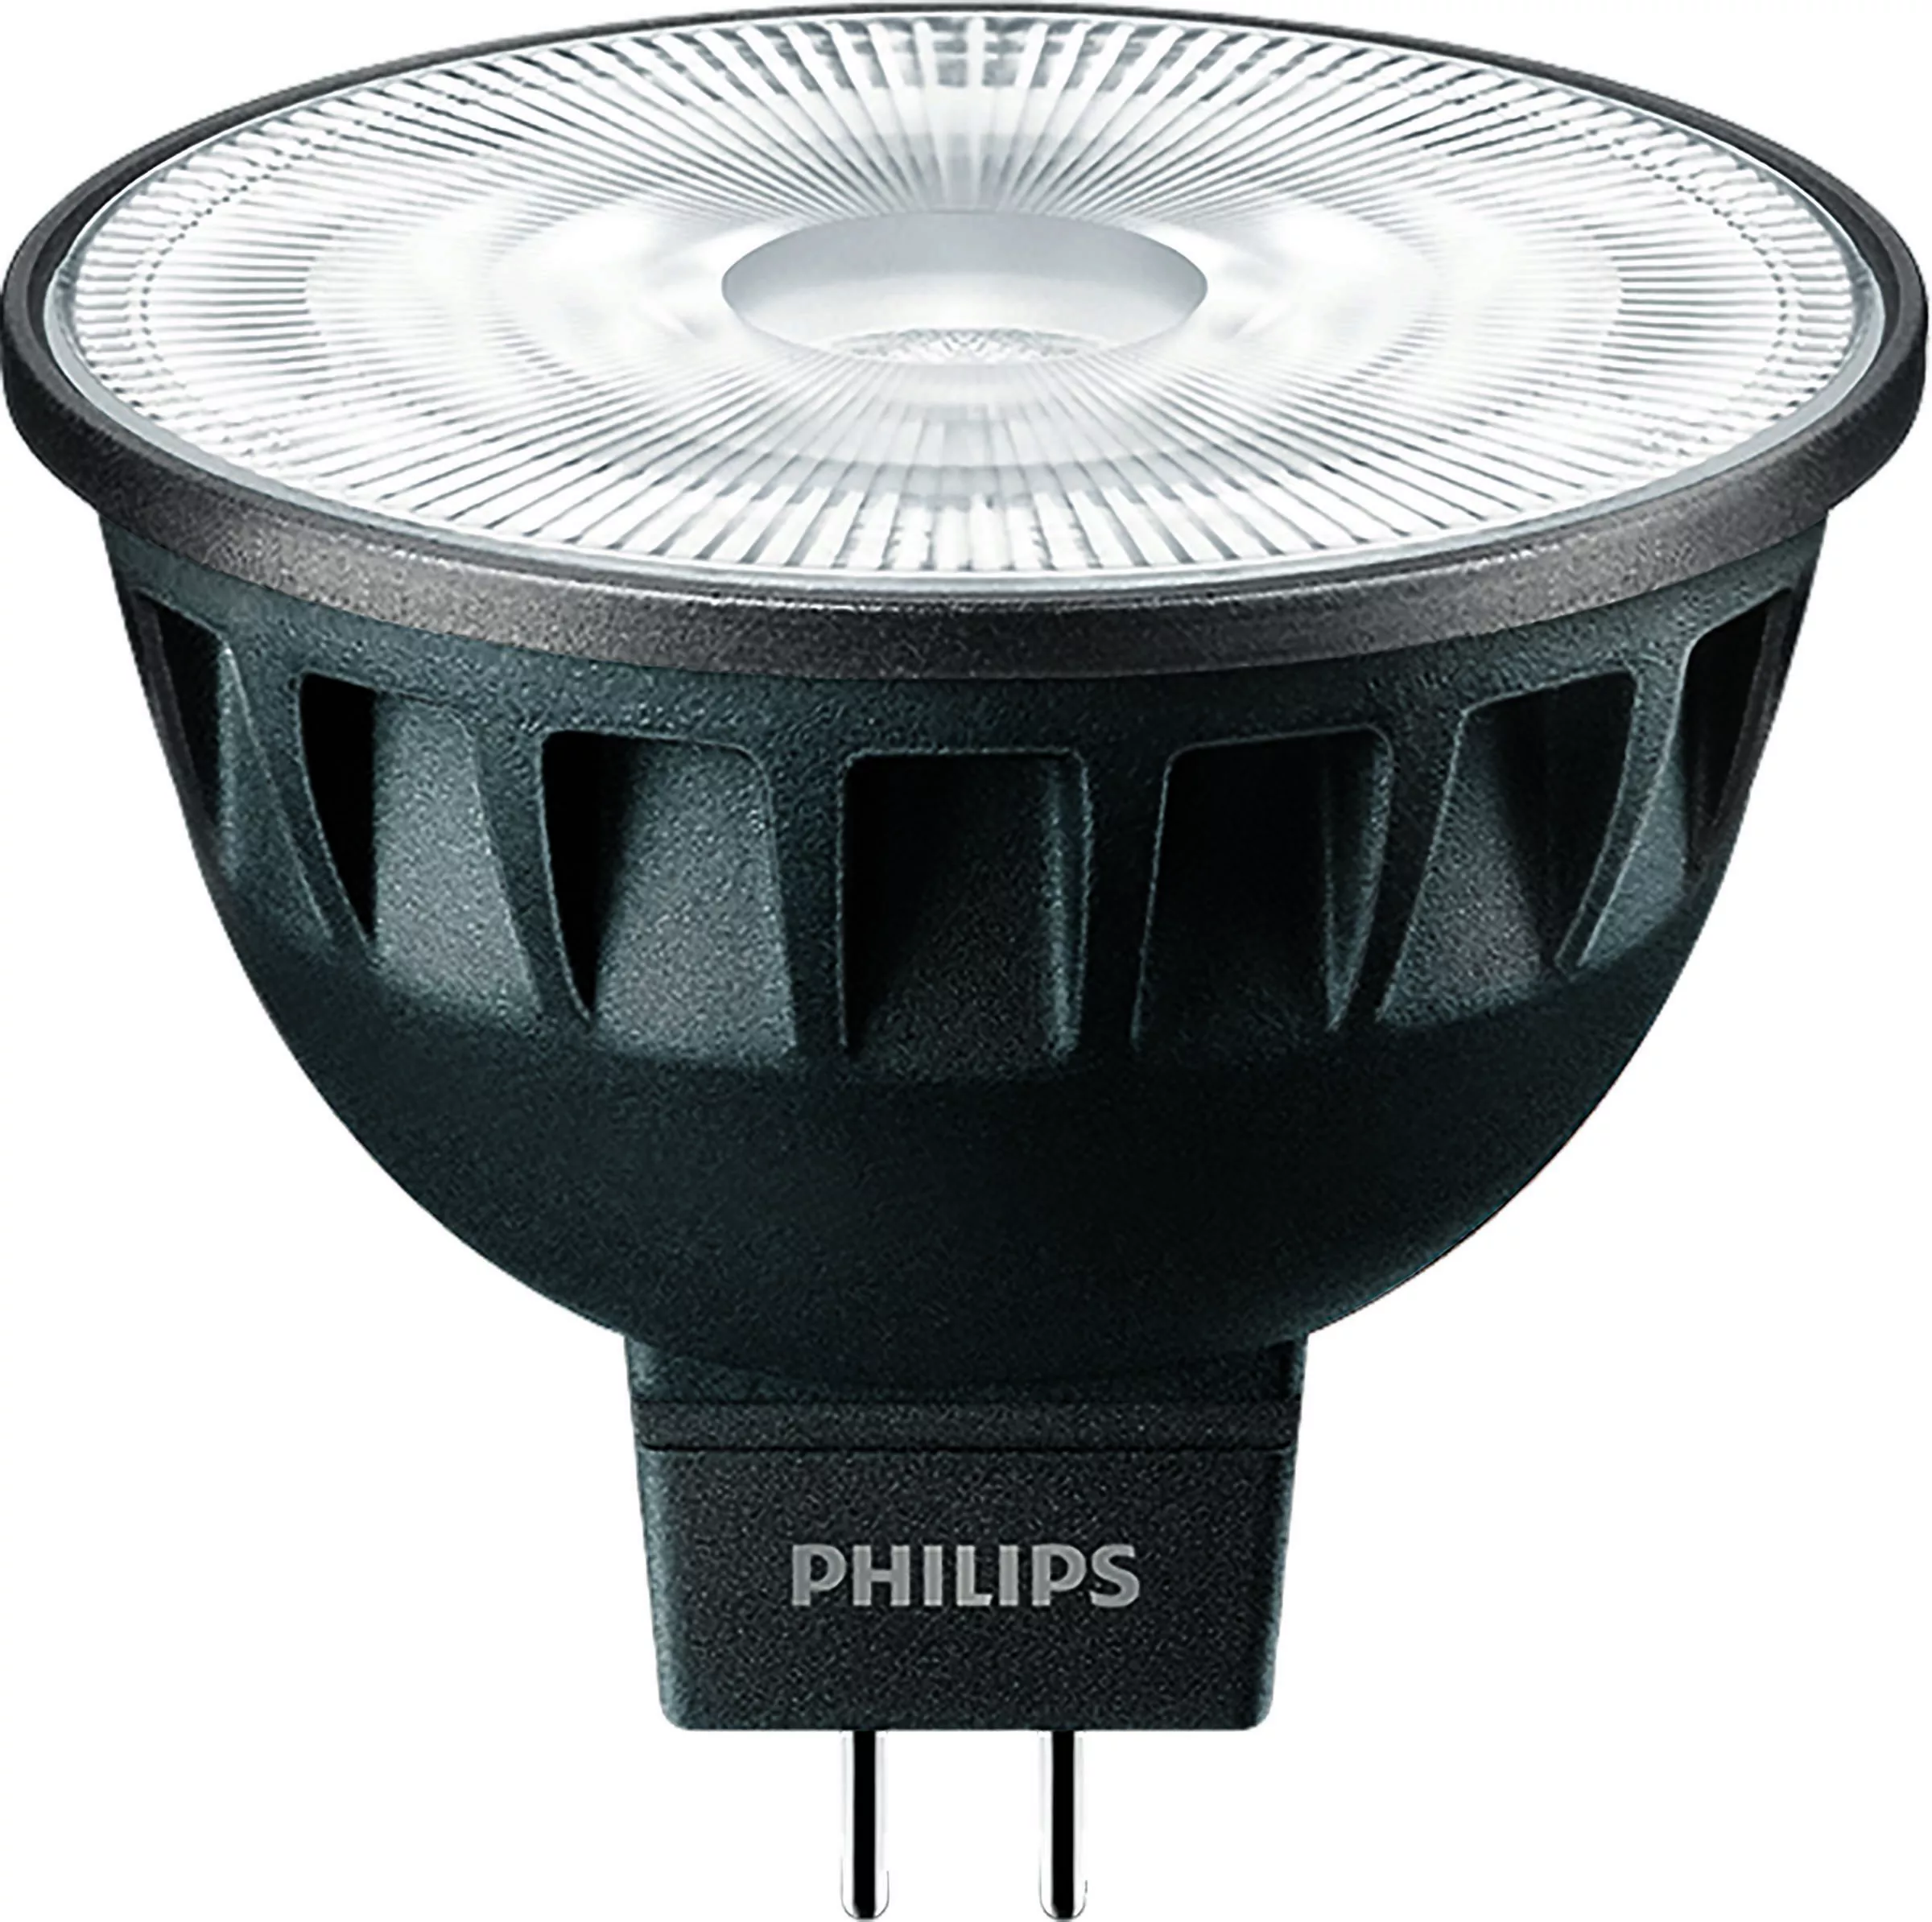 Philips Lighting LED-Reflektorlampr MR16 GU5.3 927 DIM MAS LED Exp#35859100 günstig online kaufen